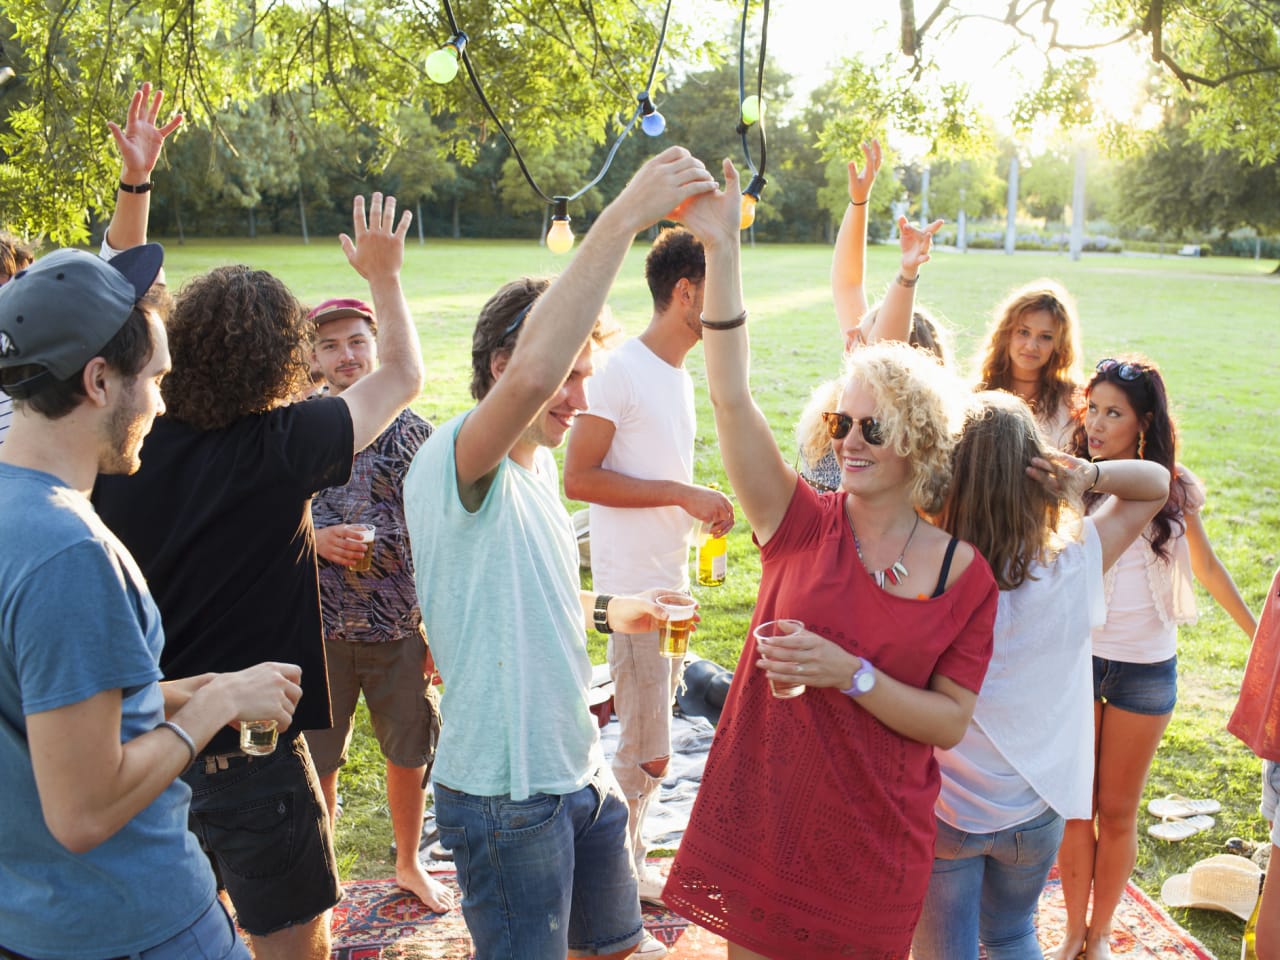 Party in einem Park © Frank van Delft/Image Source via Getty Images